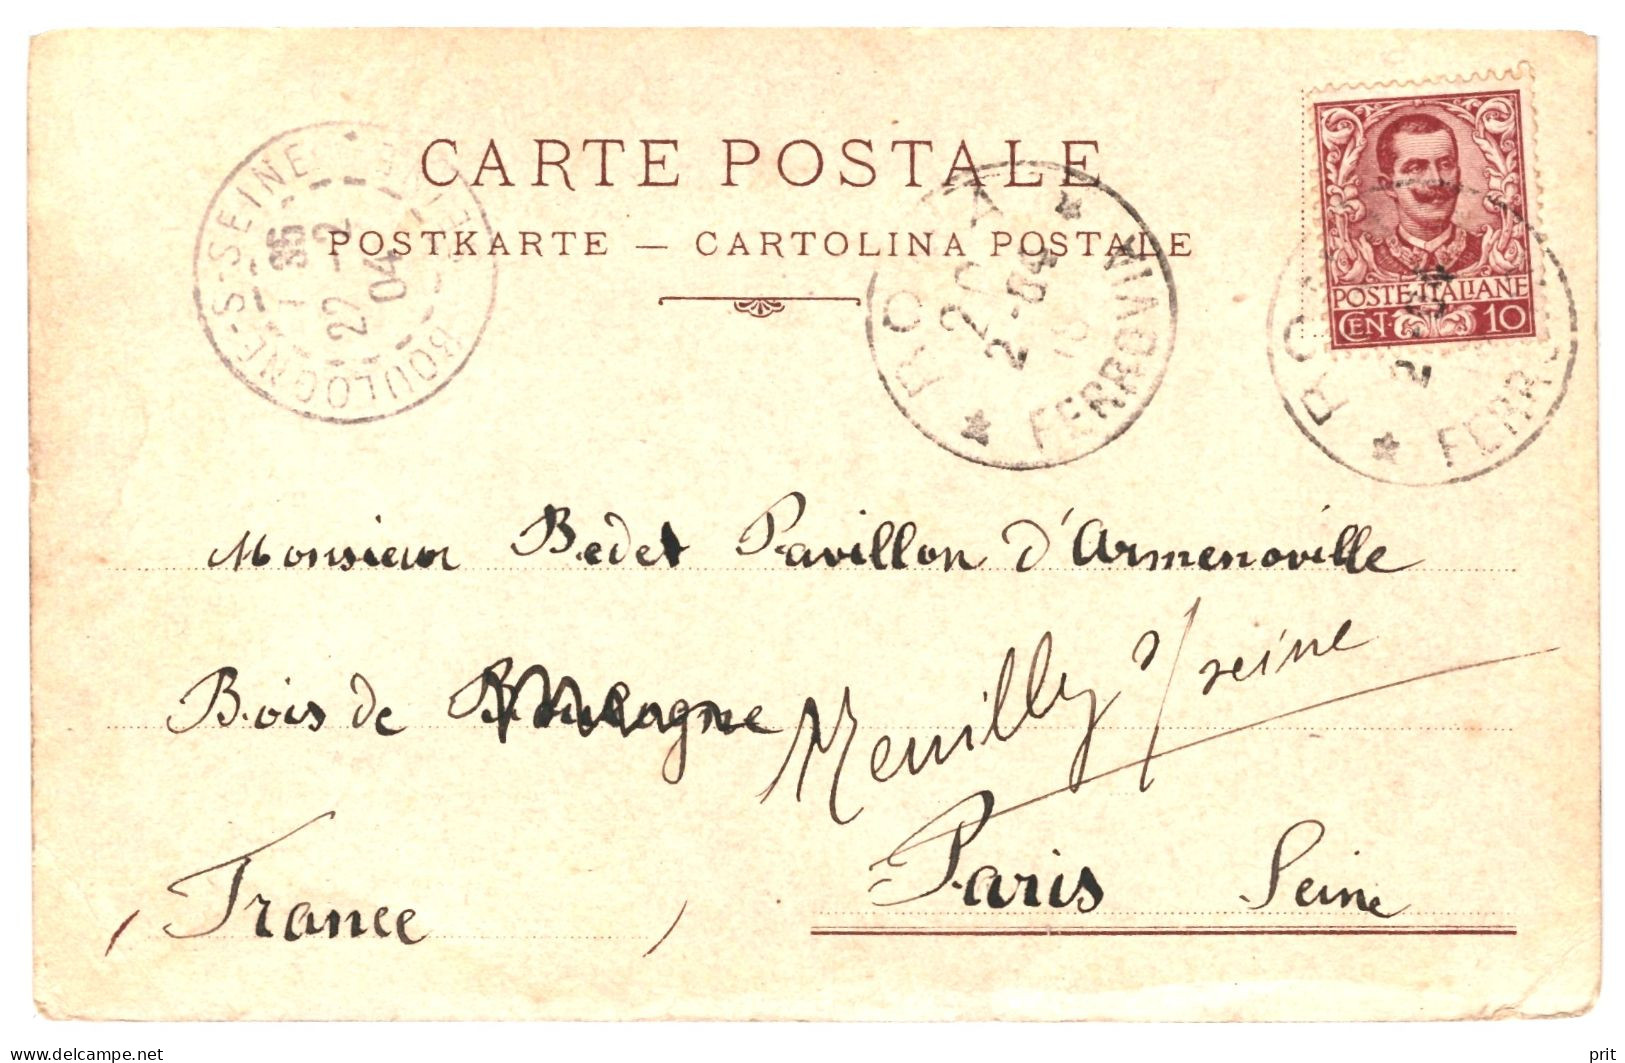 Ponte E Castel S. Angelo Roma 1904 Used Postcard From Roma Ferrovia To Boulogne-S-Seine France - Pontes